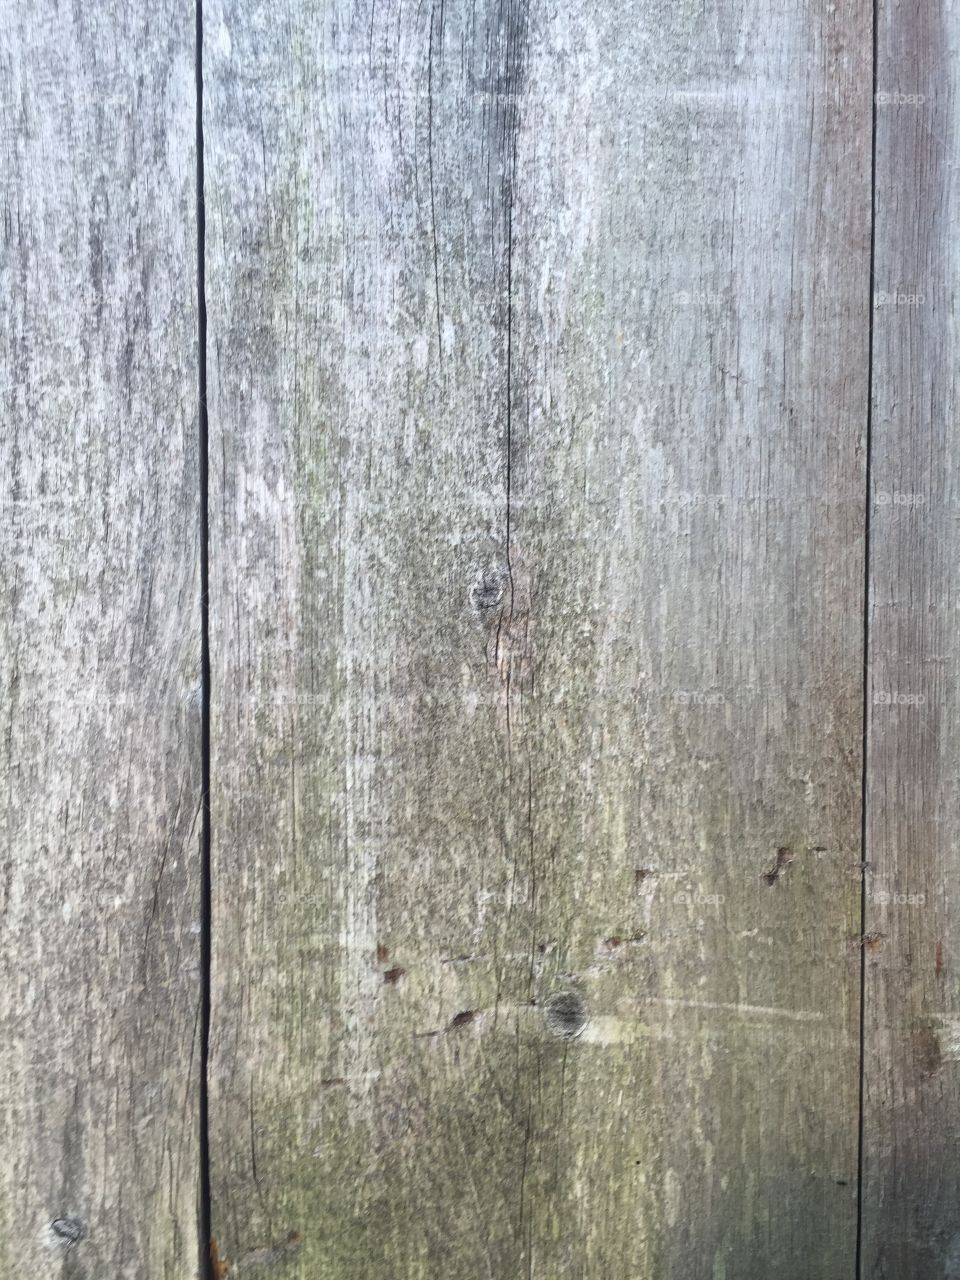 Weathered barn wall